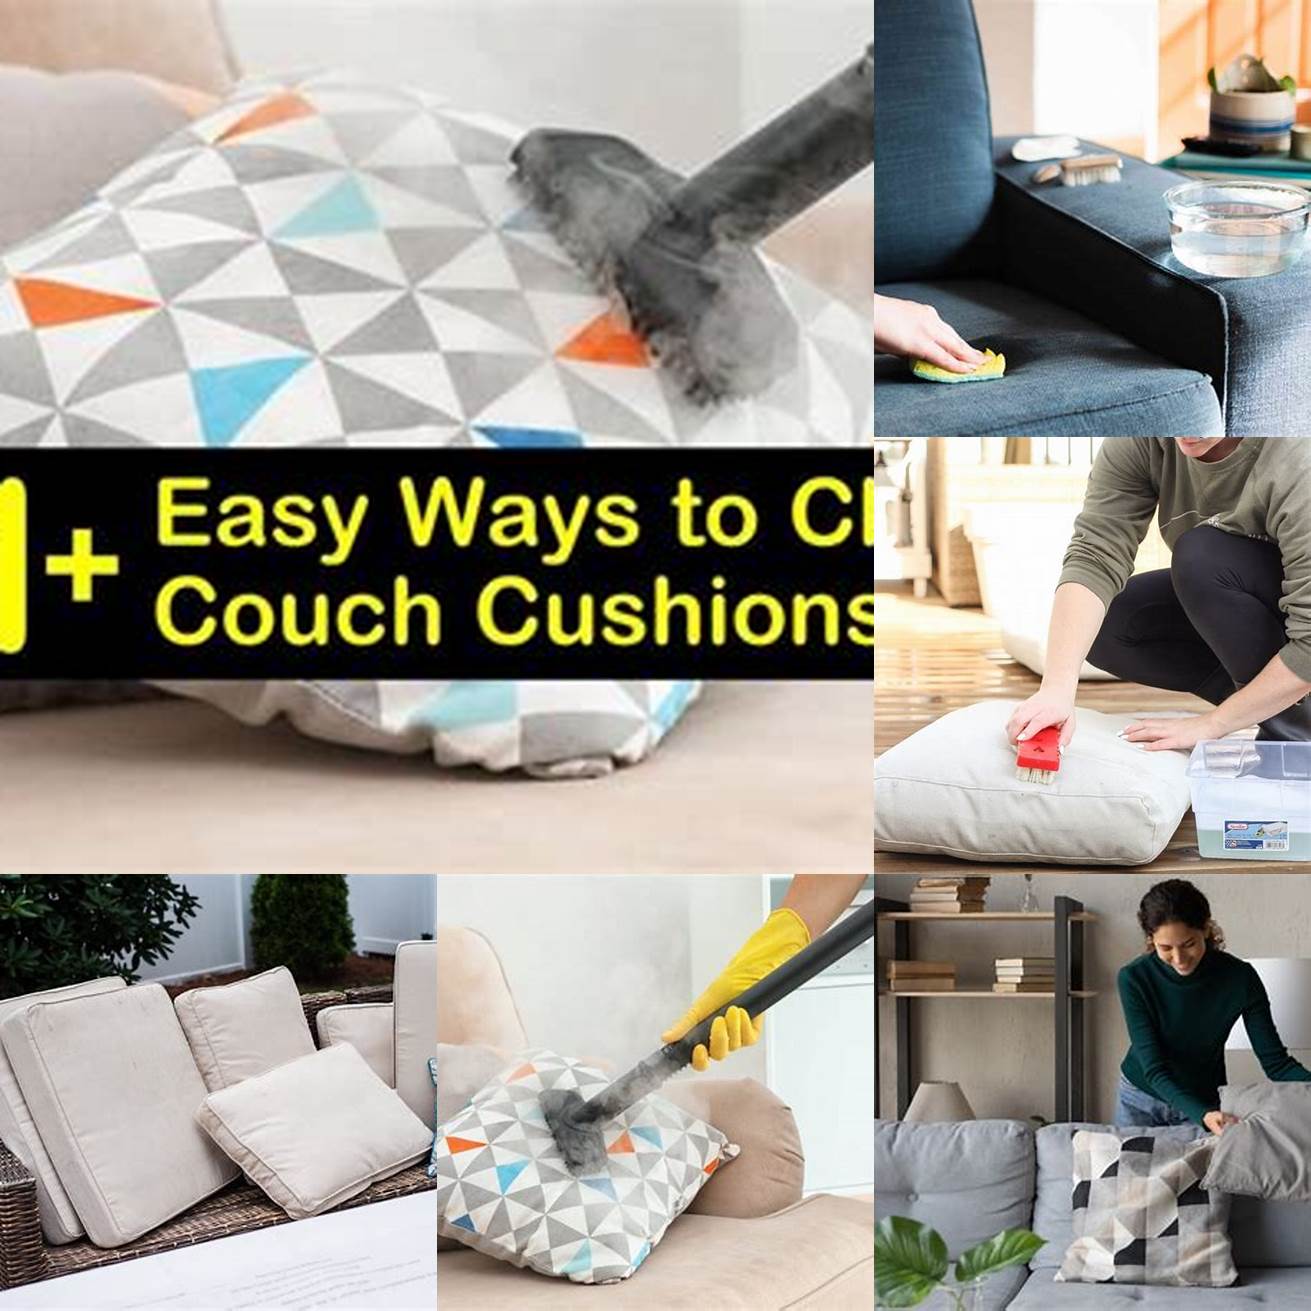 Clean Cushions Regularly